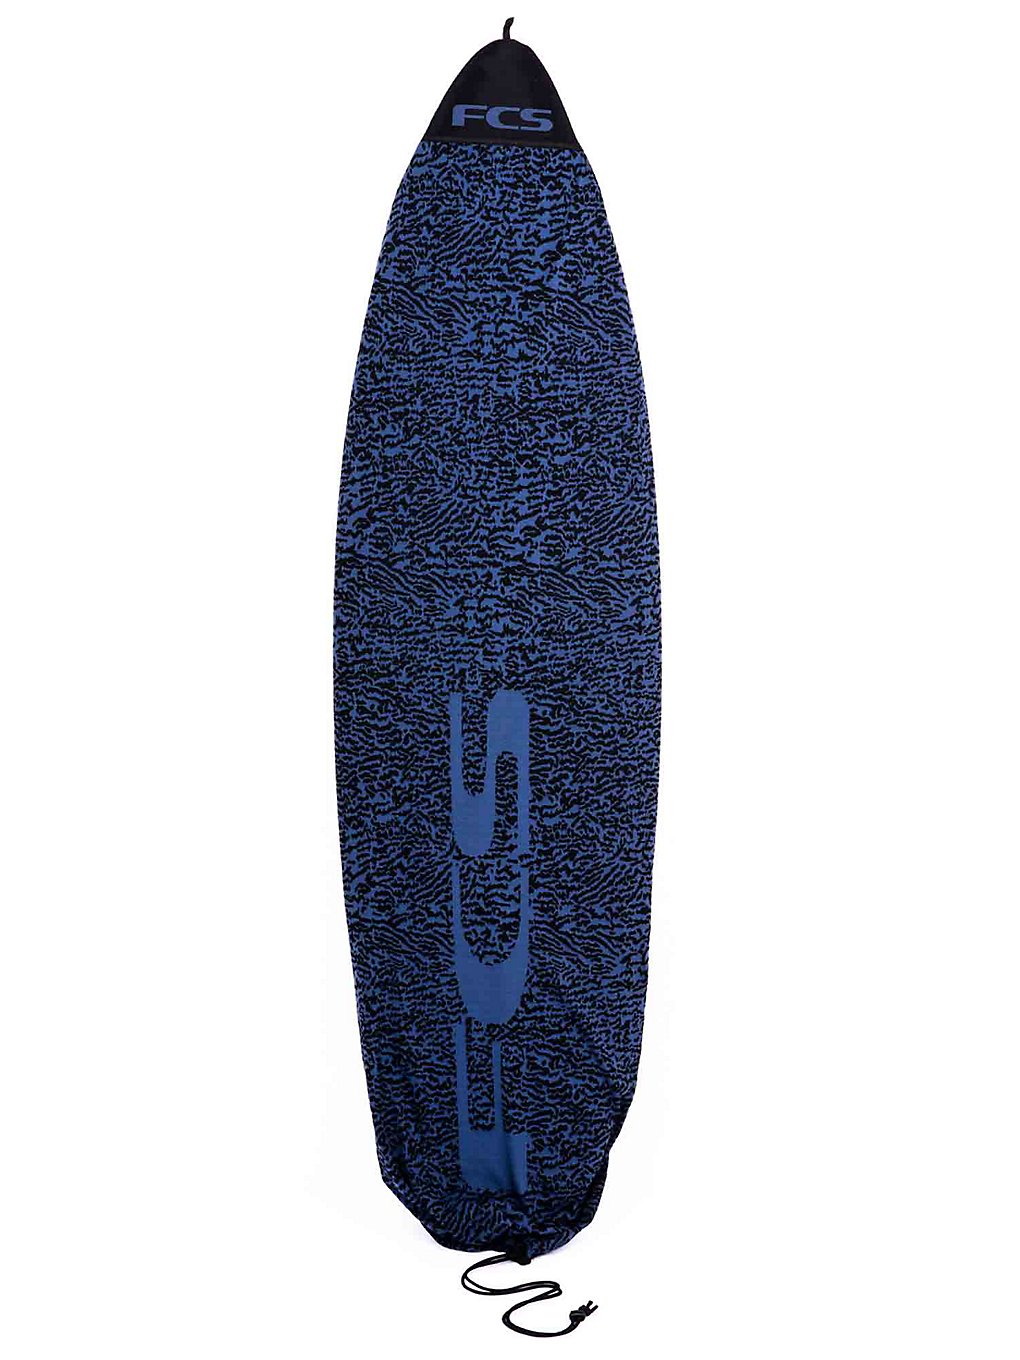 FCS Stretch Fun Board 6'0" Surfboard-Tasche stone blue kaufen